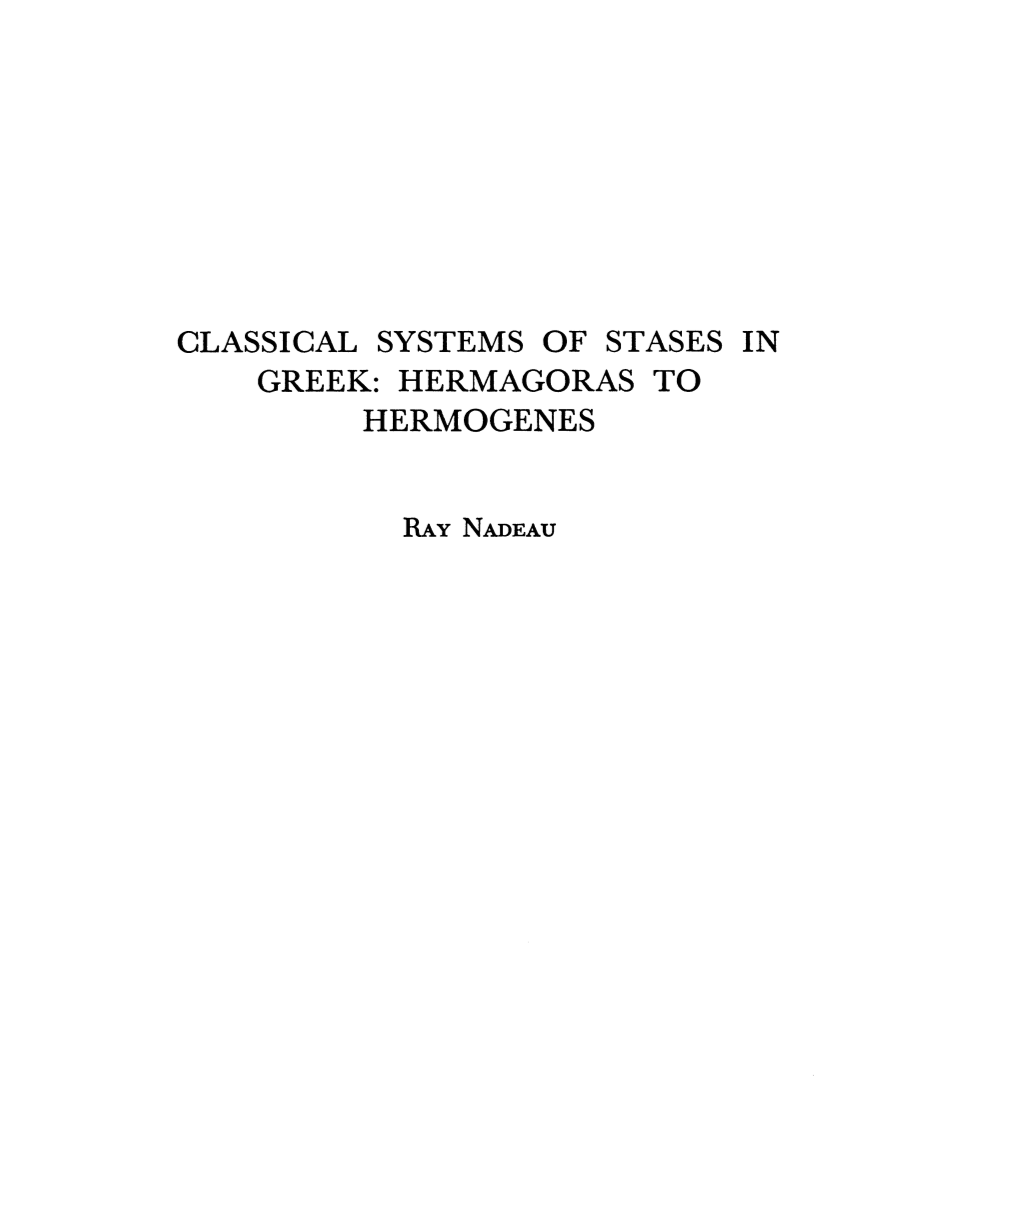 Hermagoras to Hermogenes Nadeau, Ray Greek, Roman and Byzantine Studies; Jan 1, 1959; 2, 1; Proquest Pg